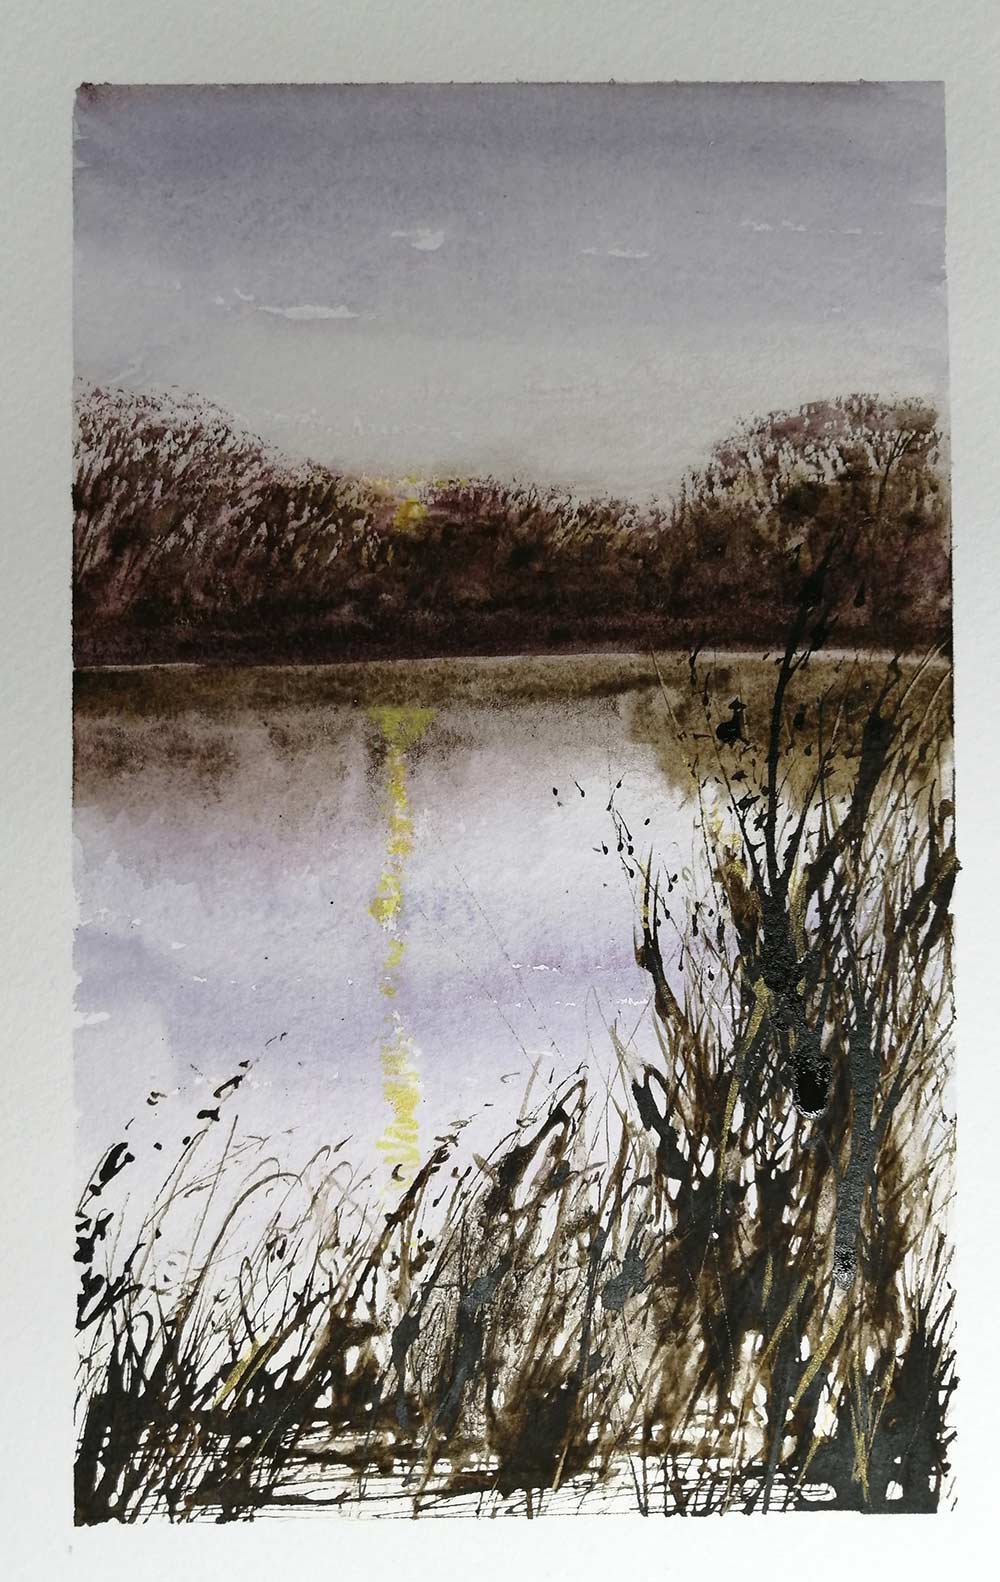 Water & grasses sketch